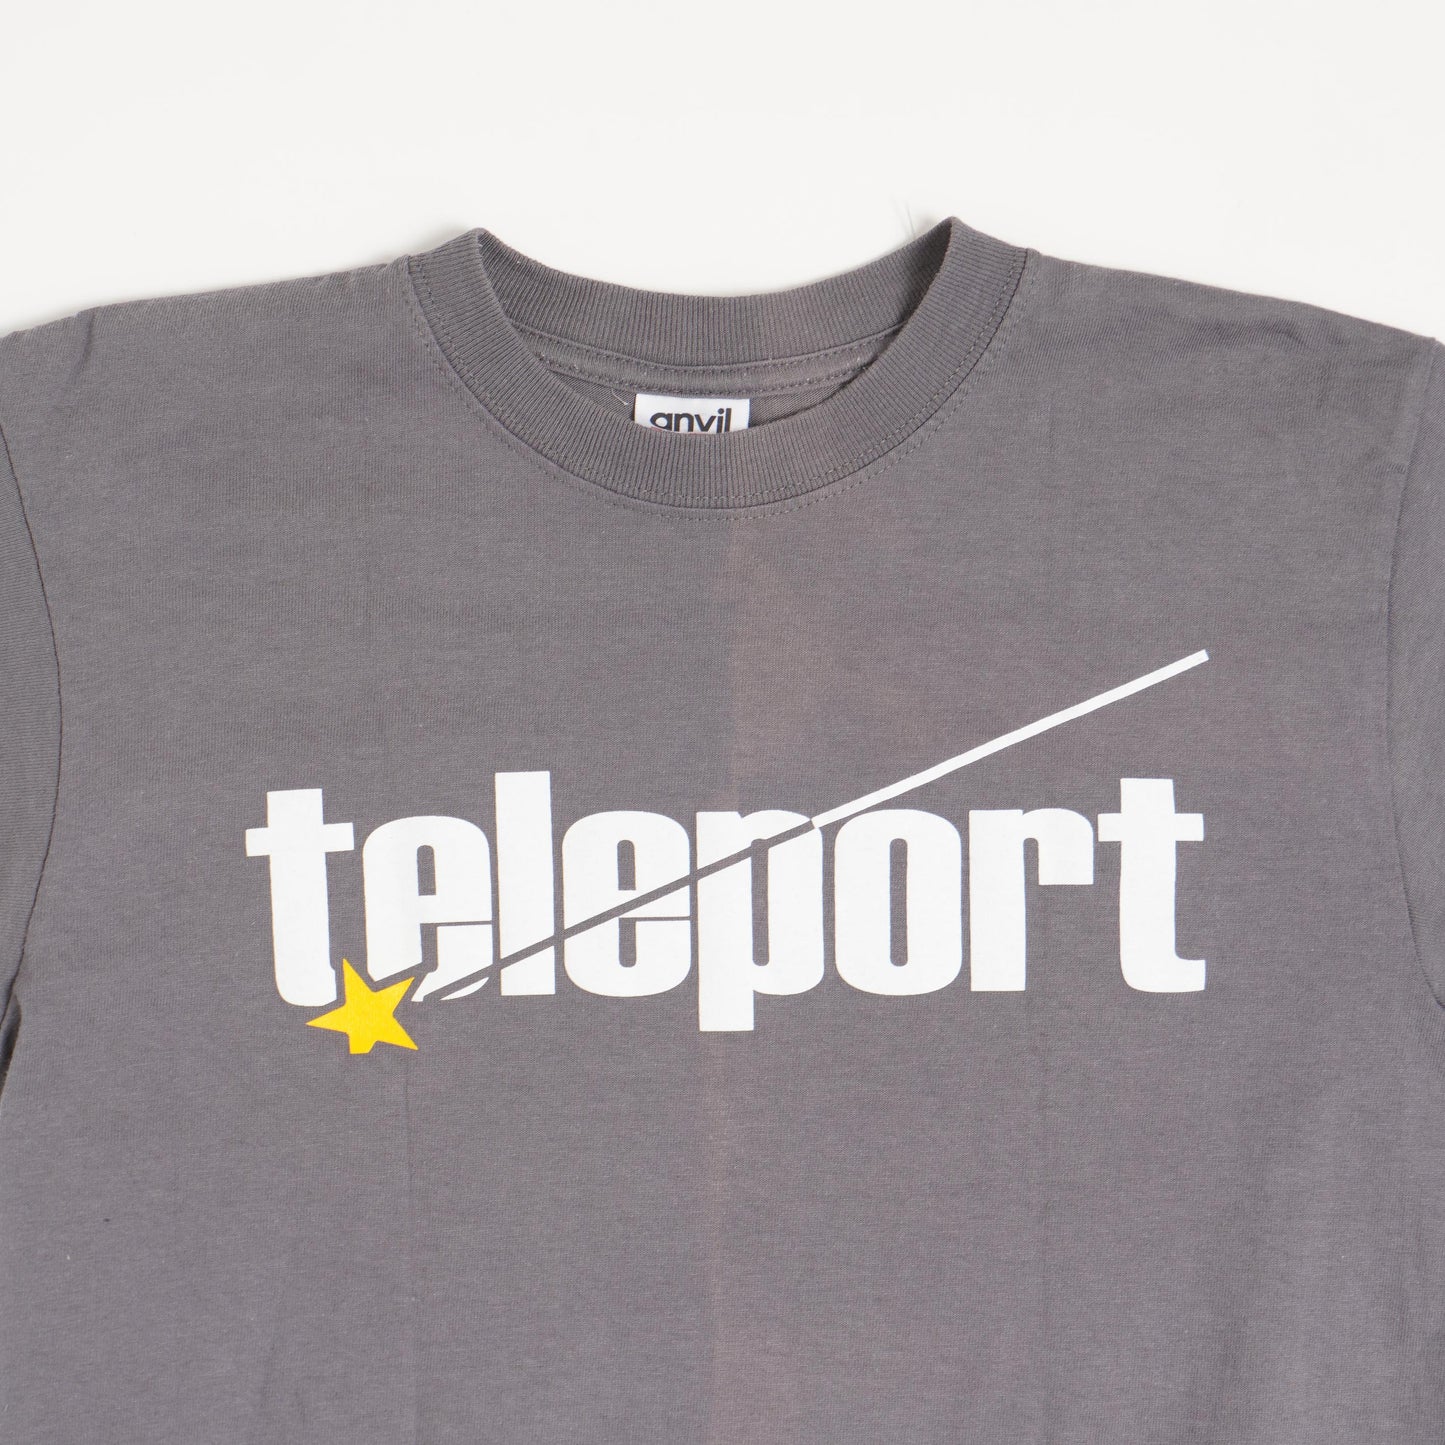 1990s TELEPORT T-SHIRT - S